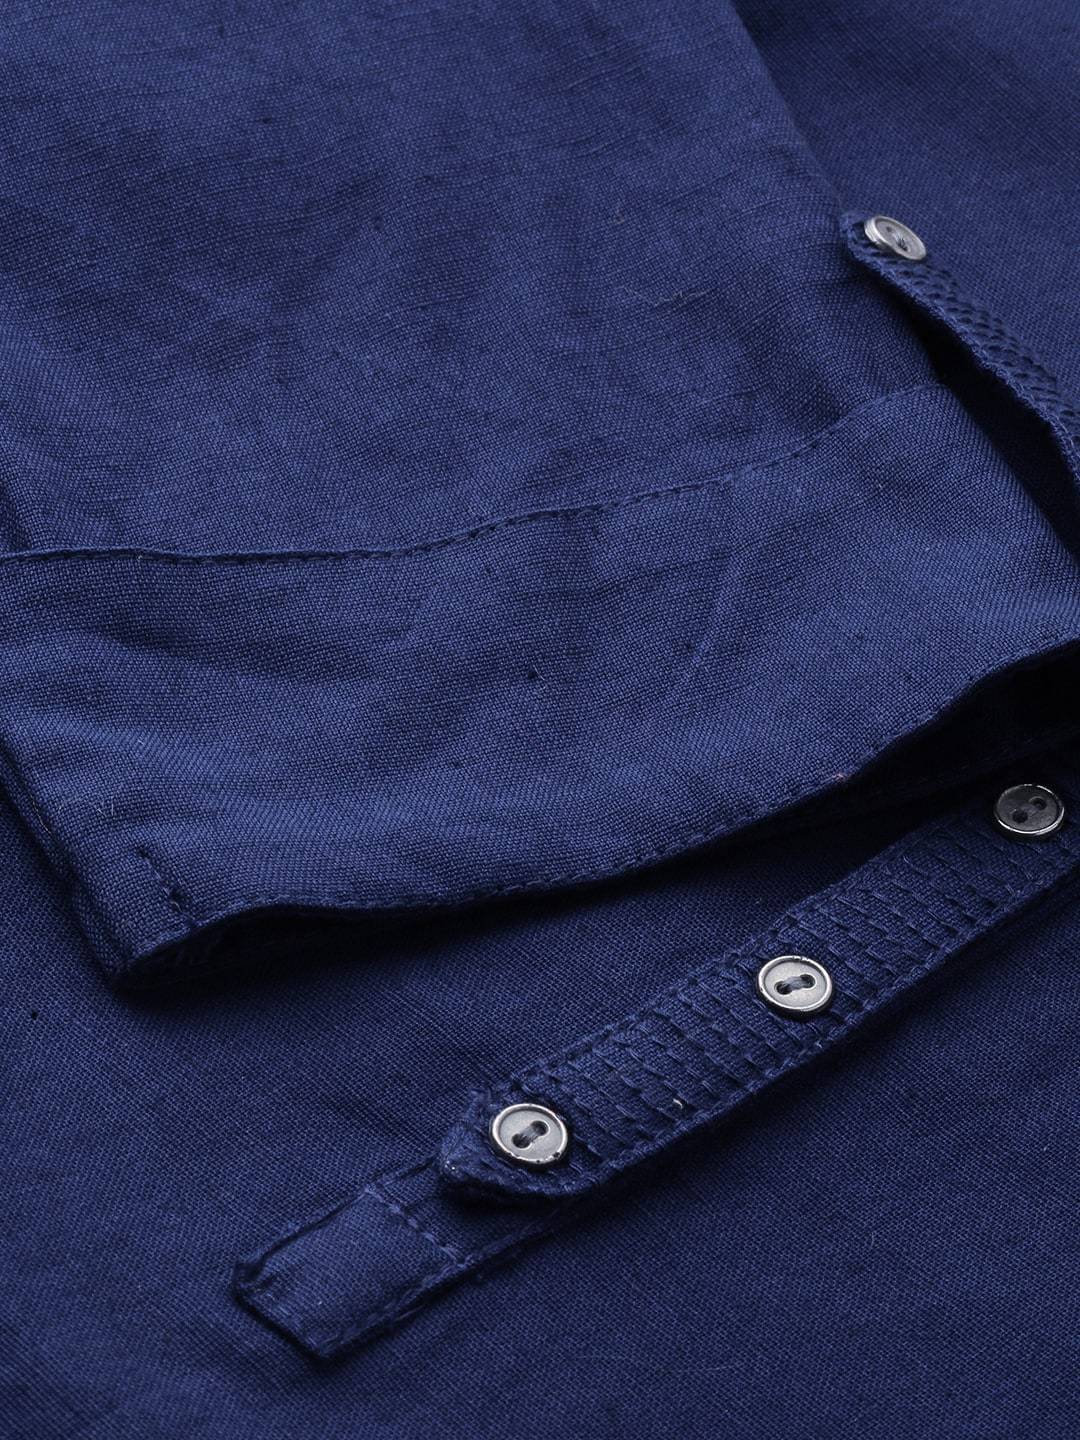 Women's Blue Solid Straight Roll Up Sleeve Kurti - Noz2Toz